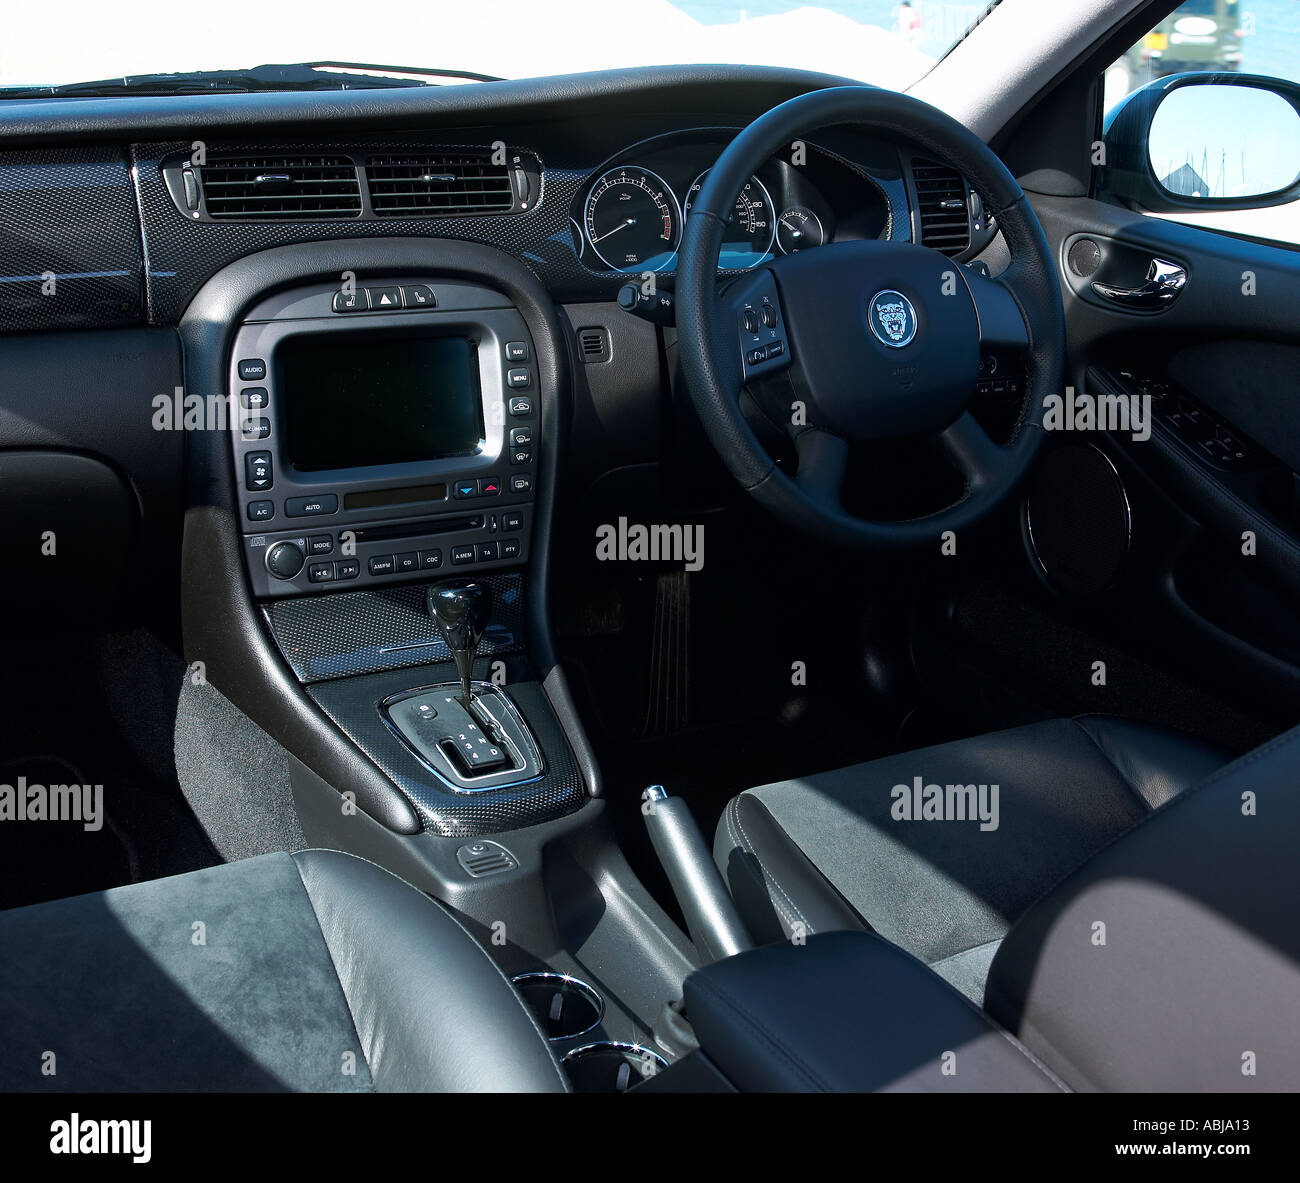 Jaguar x type interior hi-res stock photography and images - Alamy